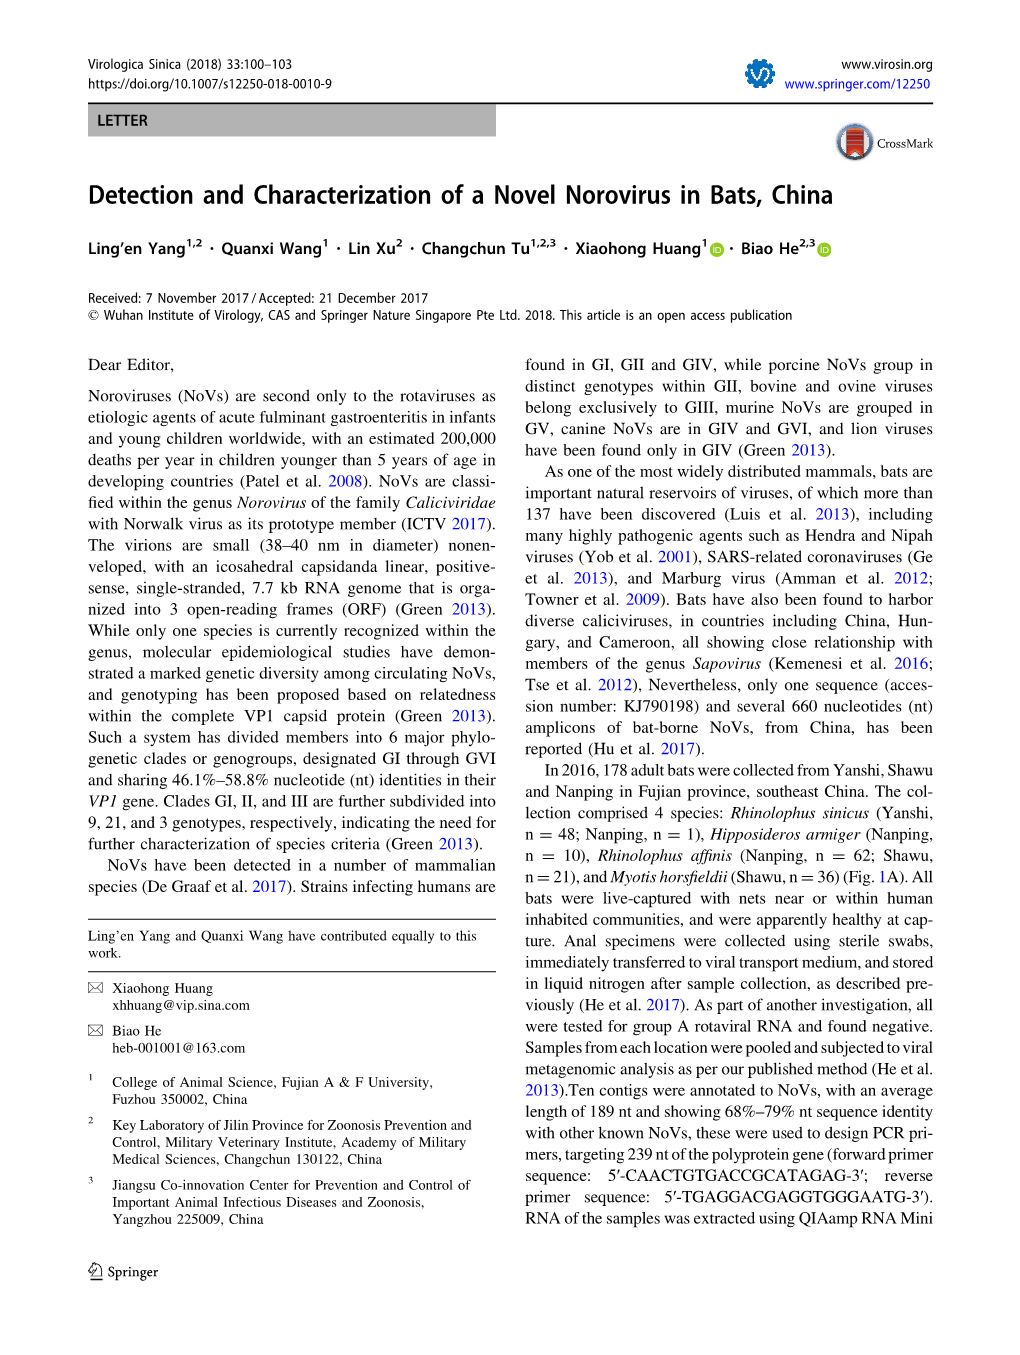 Detection and Characterization of a Novel Norovirus in Bats, China